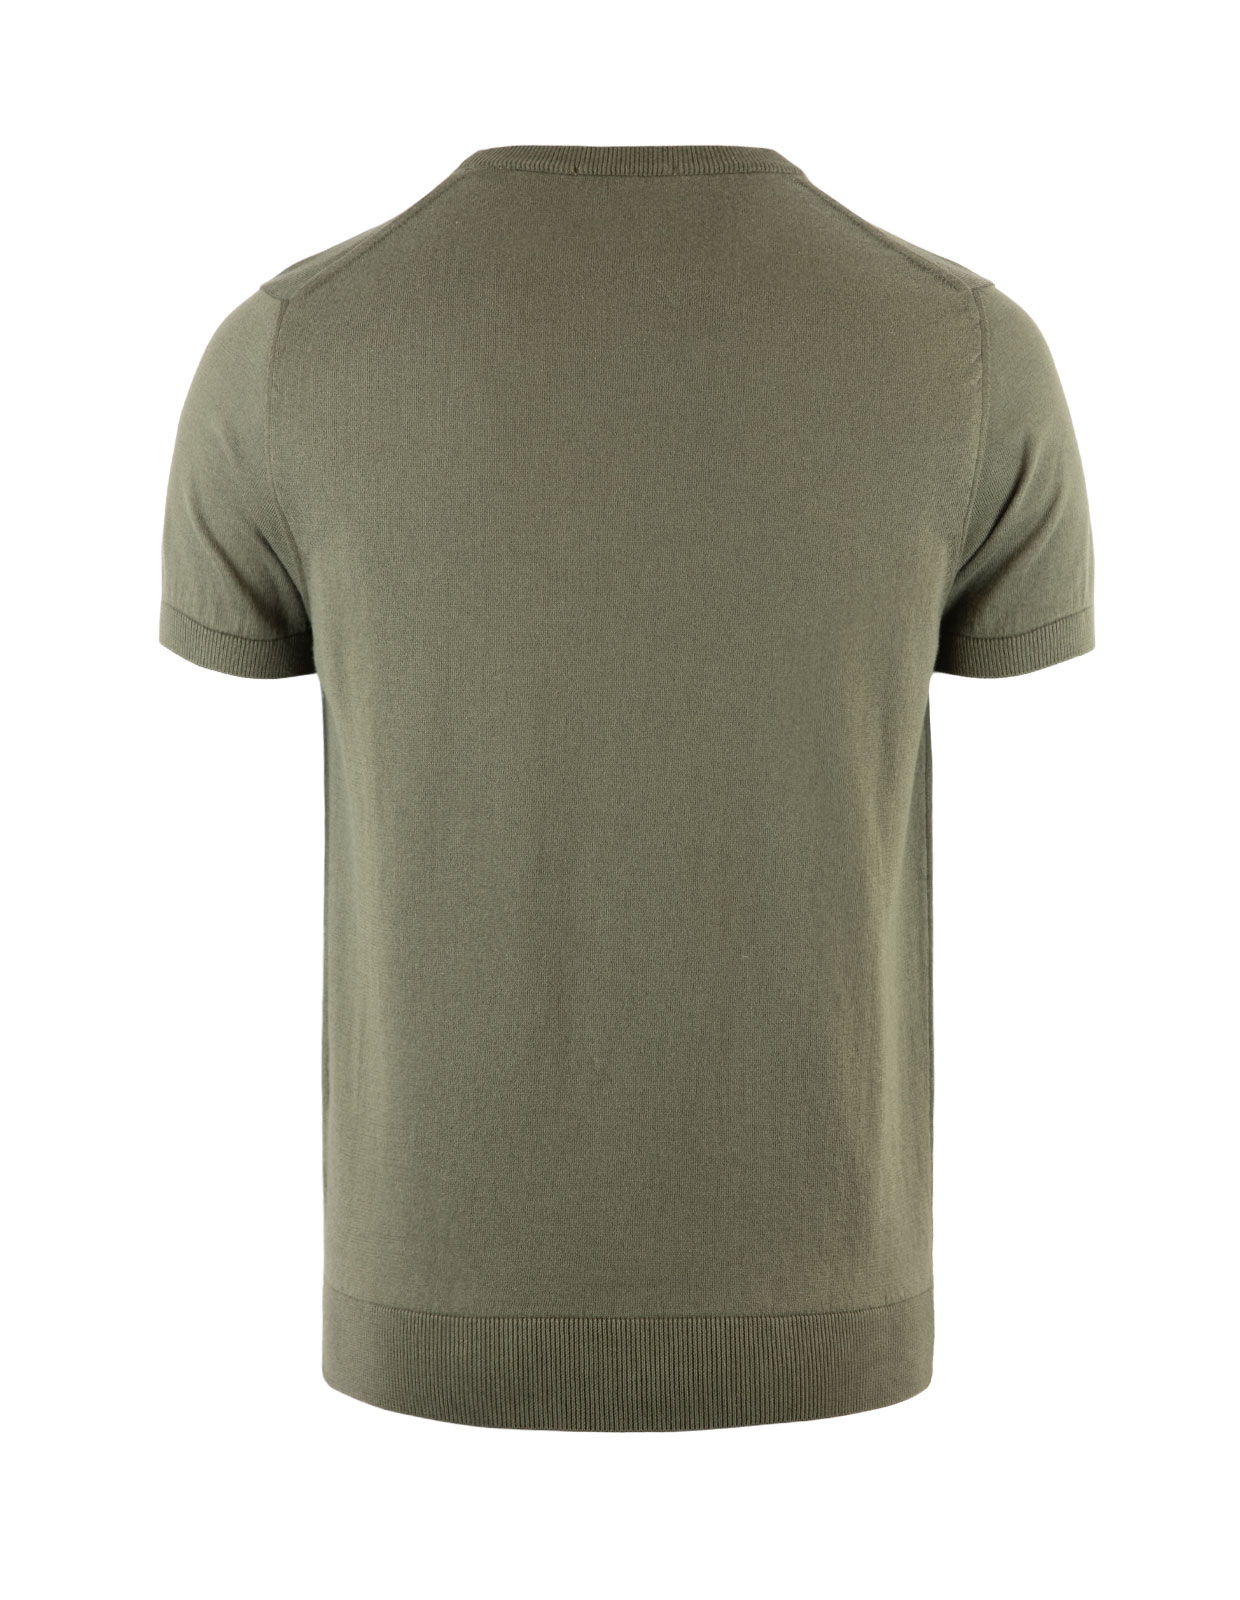 New T-Shirt Fine Knitted Cotton Grigio Verde